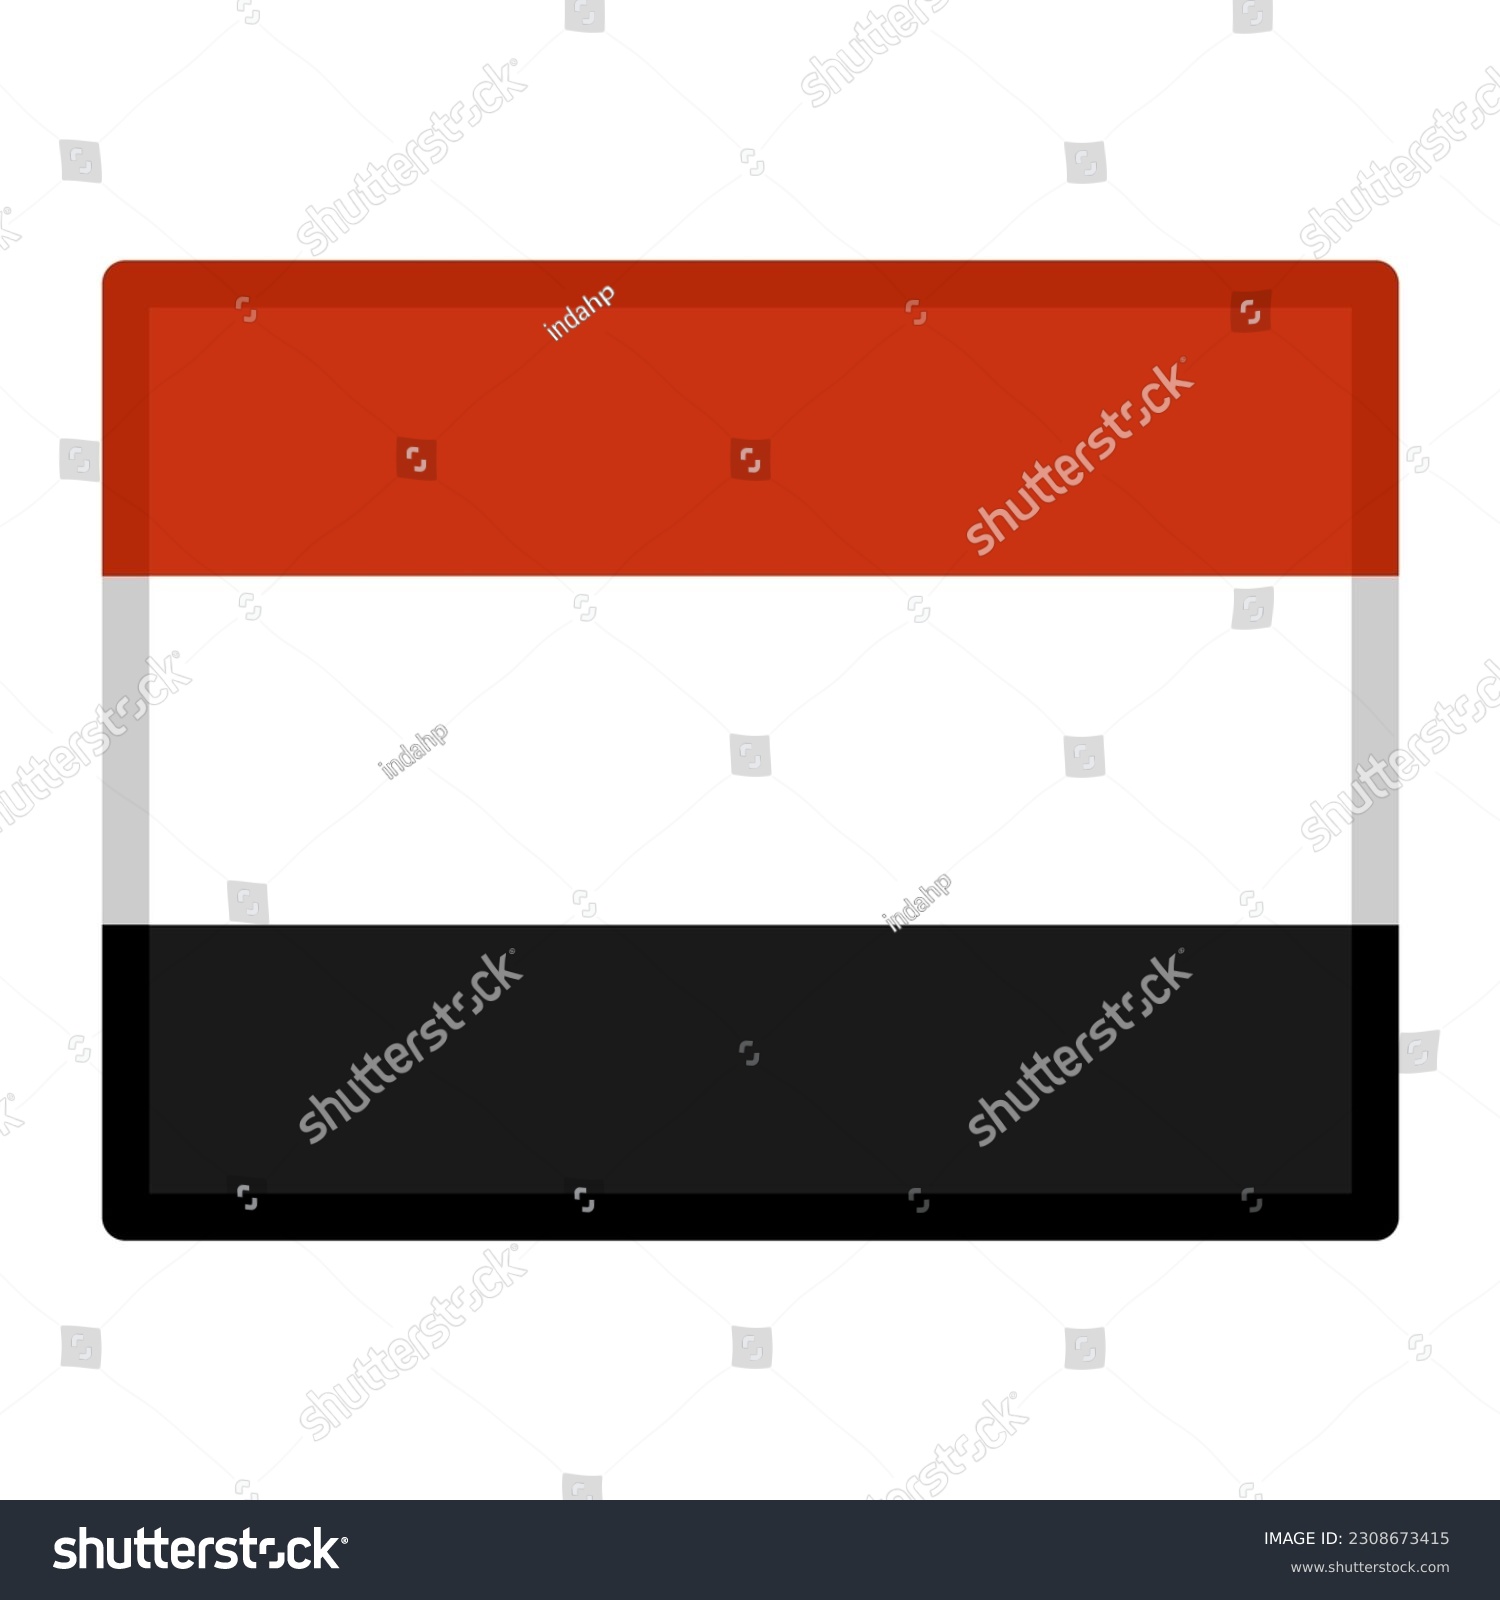 Yemen flag emoji icon flat design stock vector royalty free